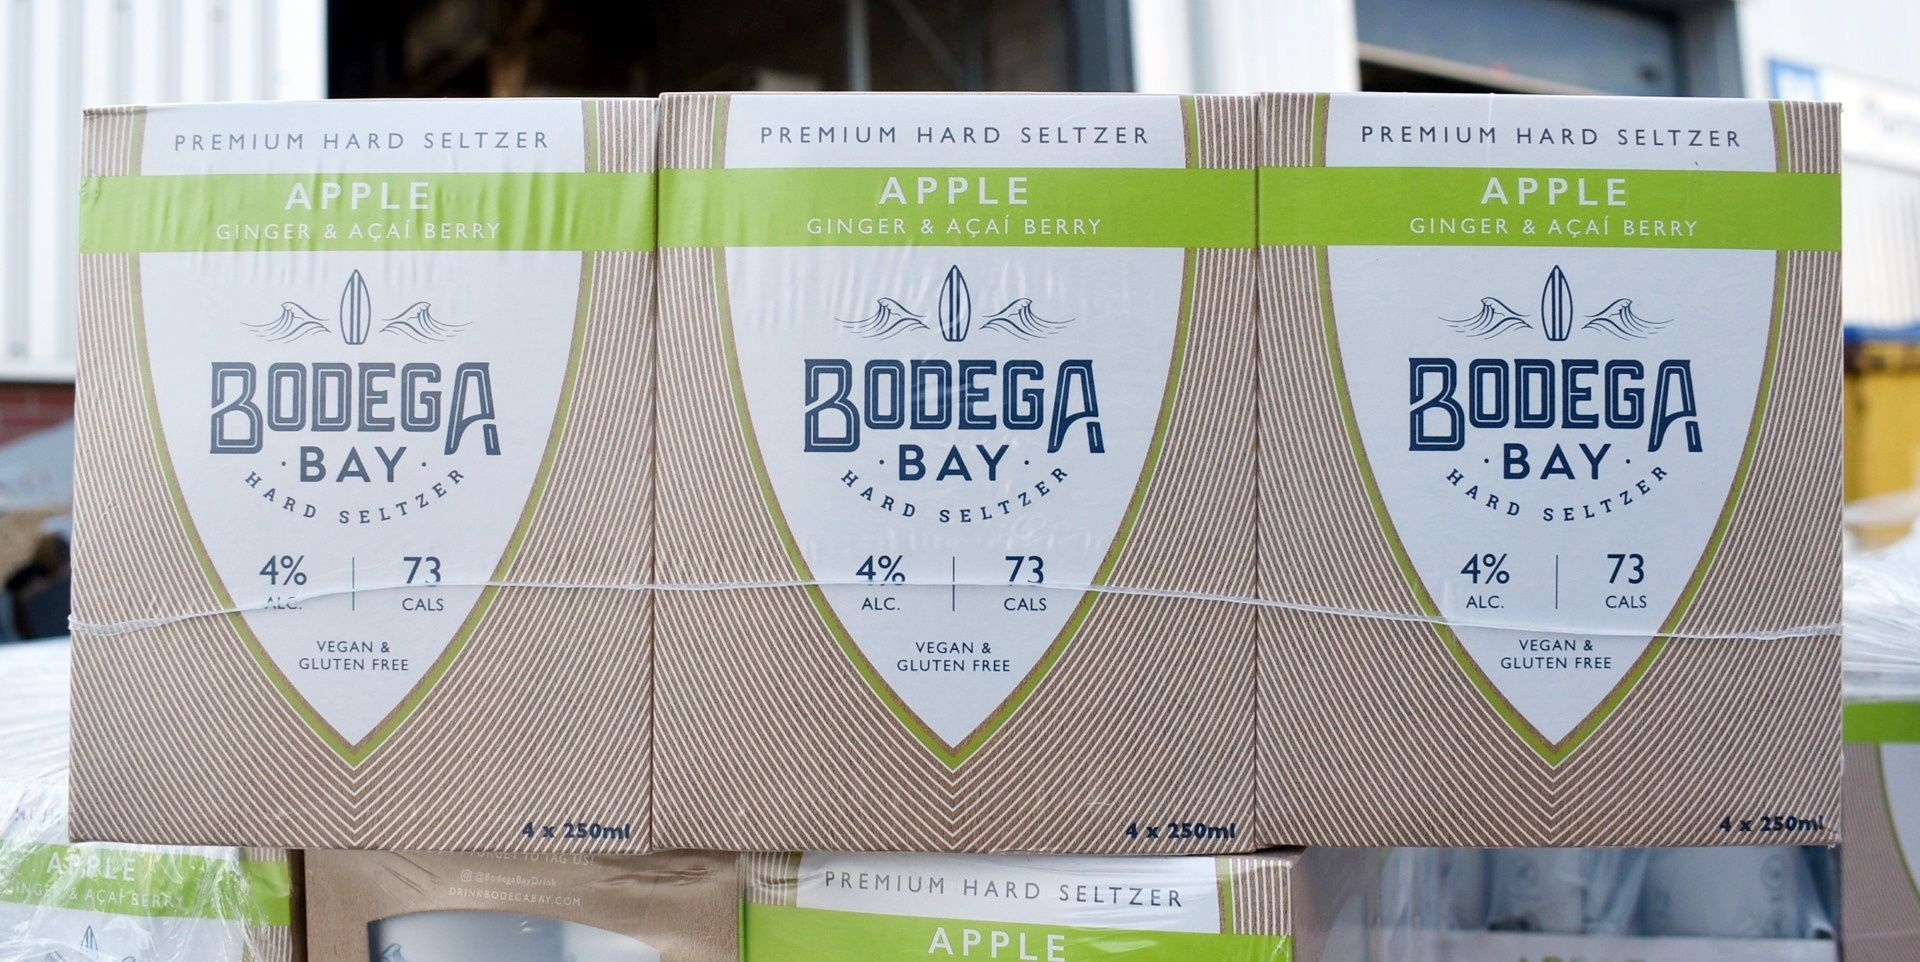 24 x Bodega Bay Hard Seltzer 250ml Alcoholic Sparkling Water Drinks - Apple Ginger & Acai Berry - Image 10 of 11